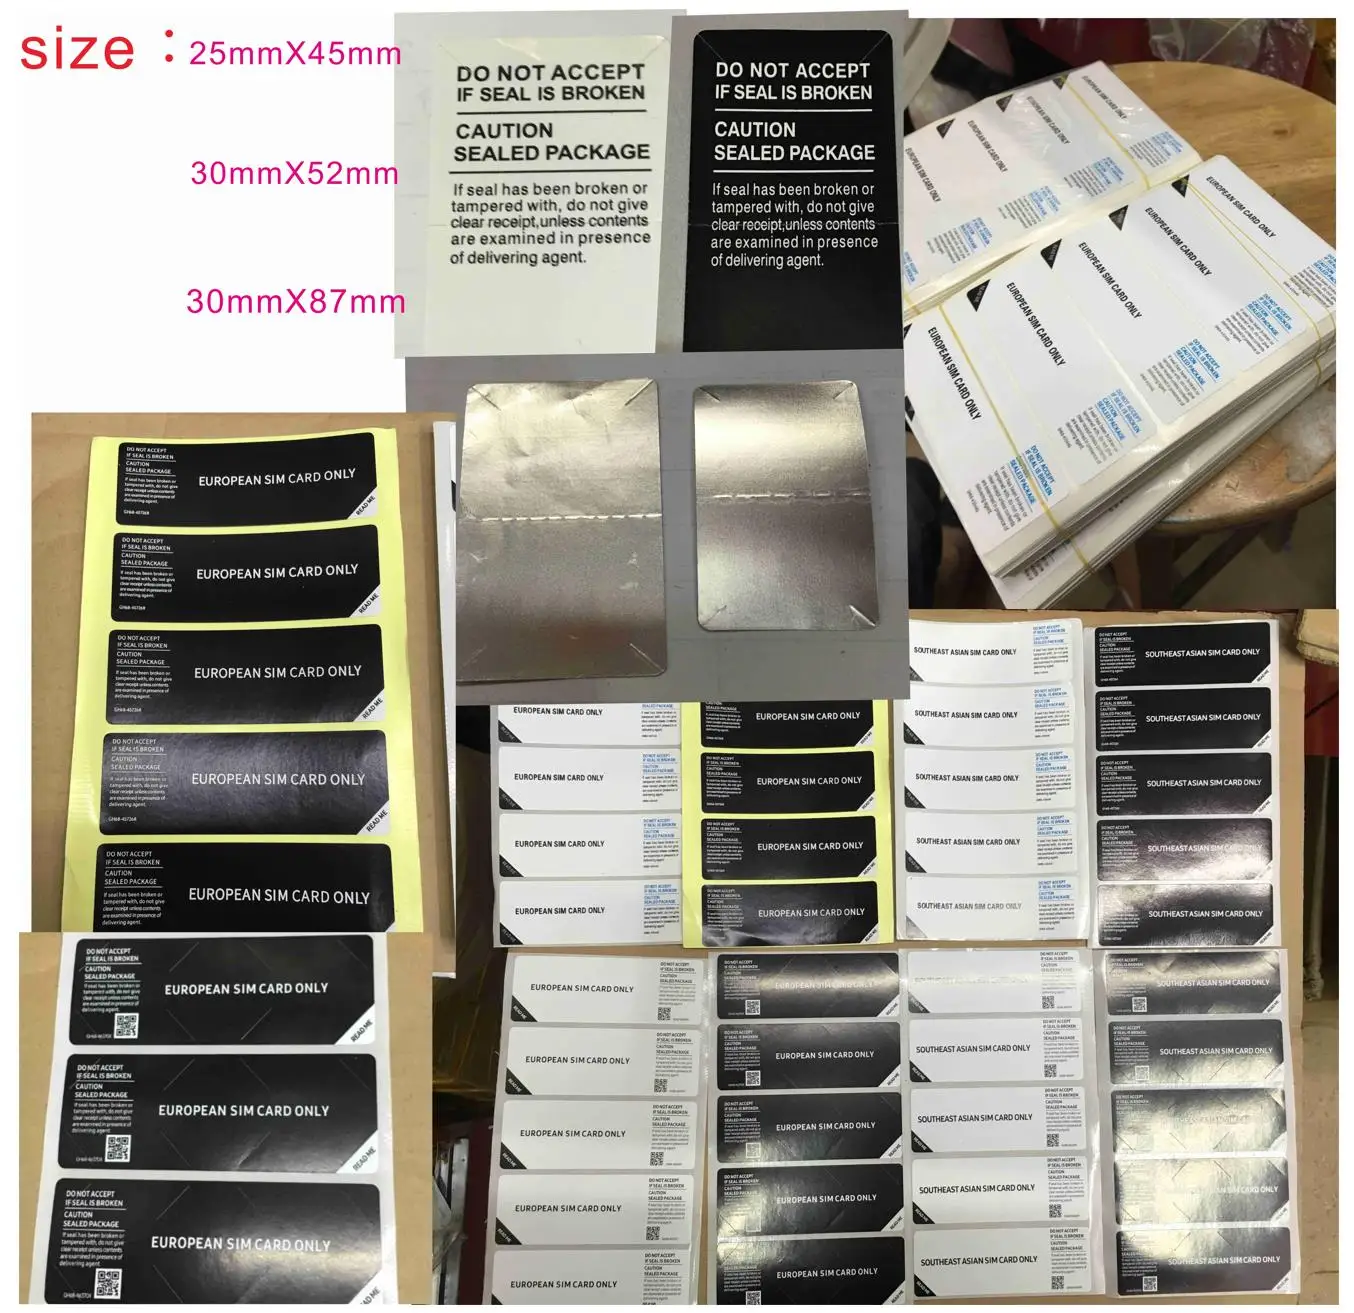 

100pcs/lot Black White SIM Card Only Seal Label Sticker For S21 NOTE20 PLUS Phone Package box sealing strip EU SA version